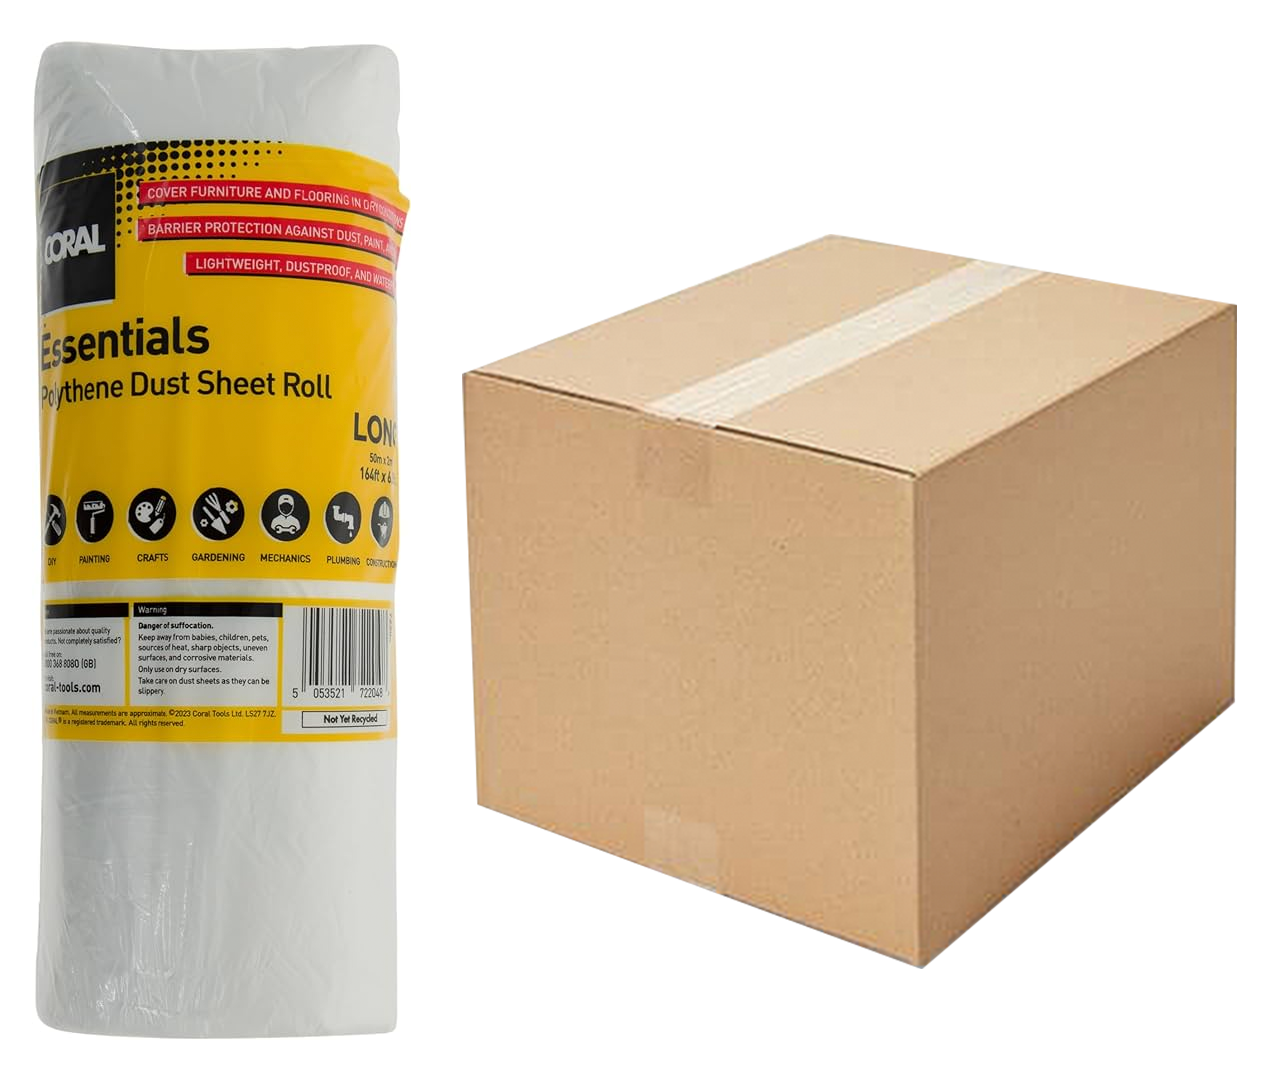 Coral Essentials Polythene Dust Roll 50m x 2m (Box of 8)